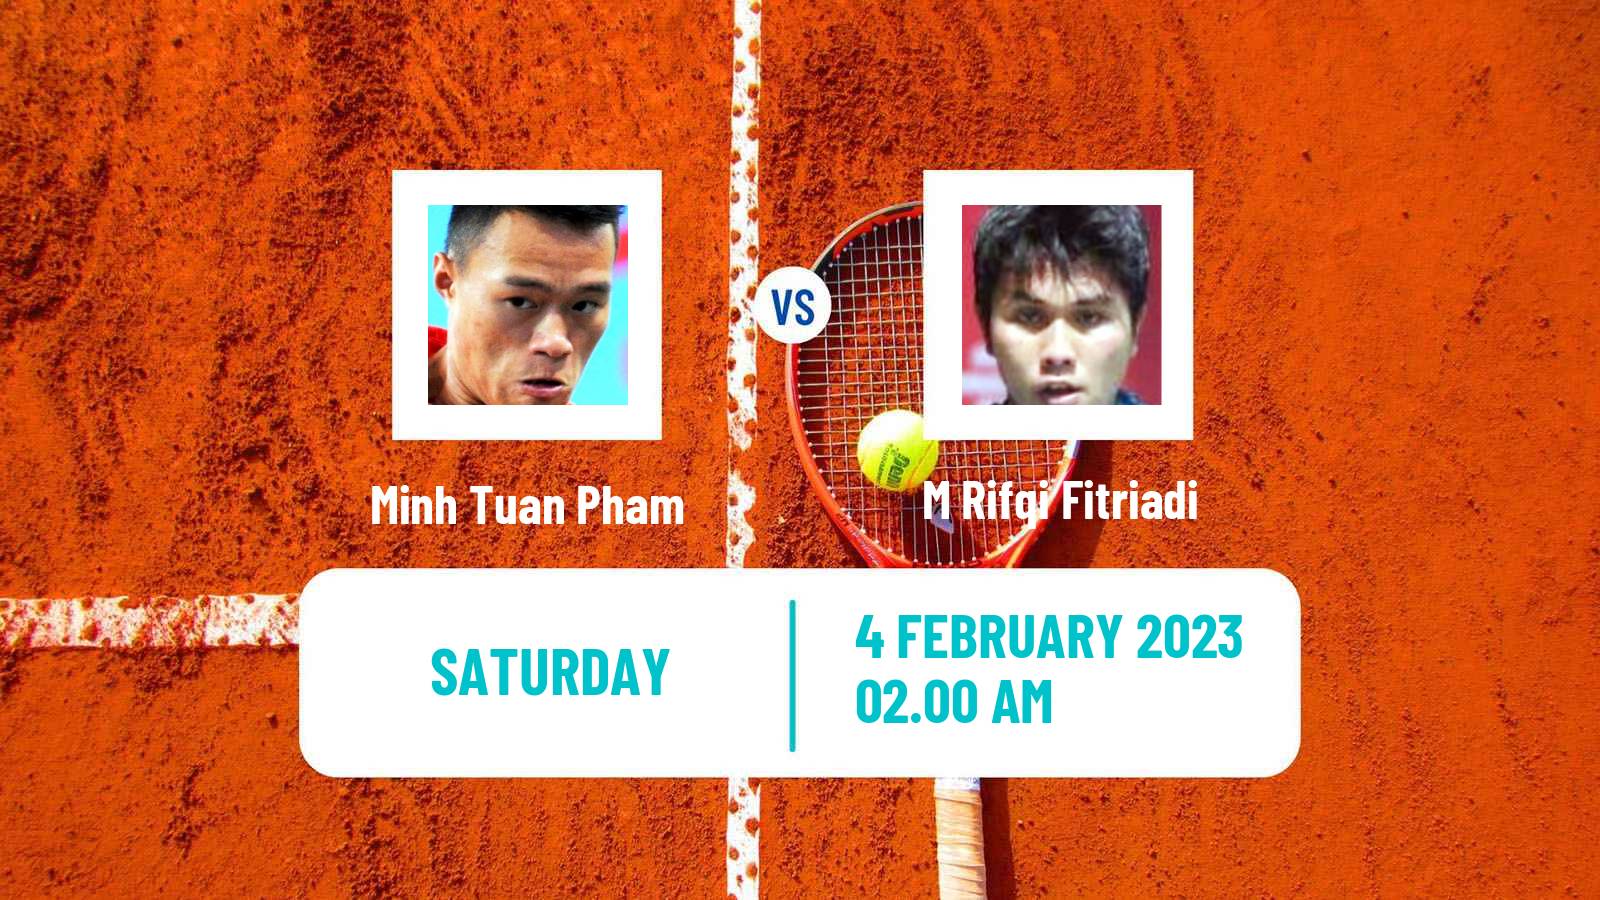 Tennis Davis Cup World Group II Minh Tuan Pham - M Rifqi Fitriadi